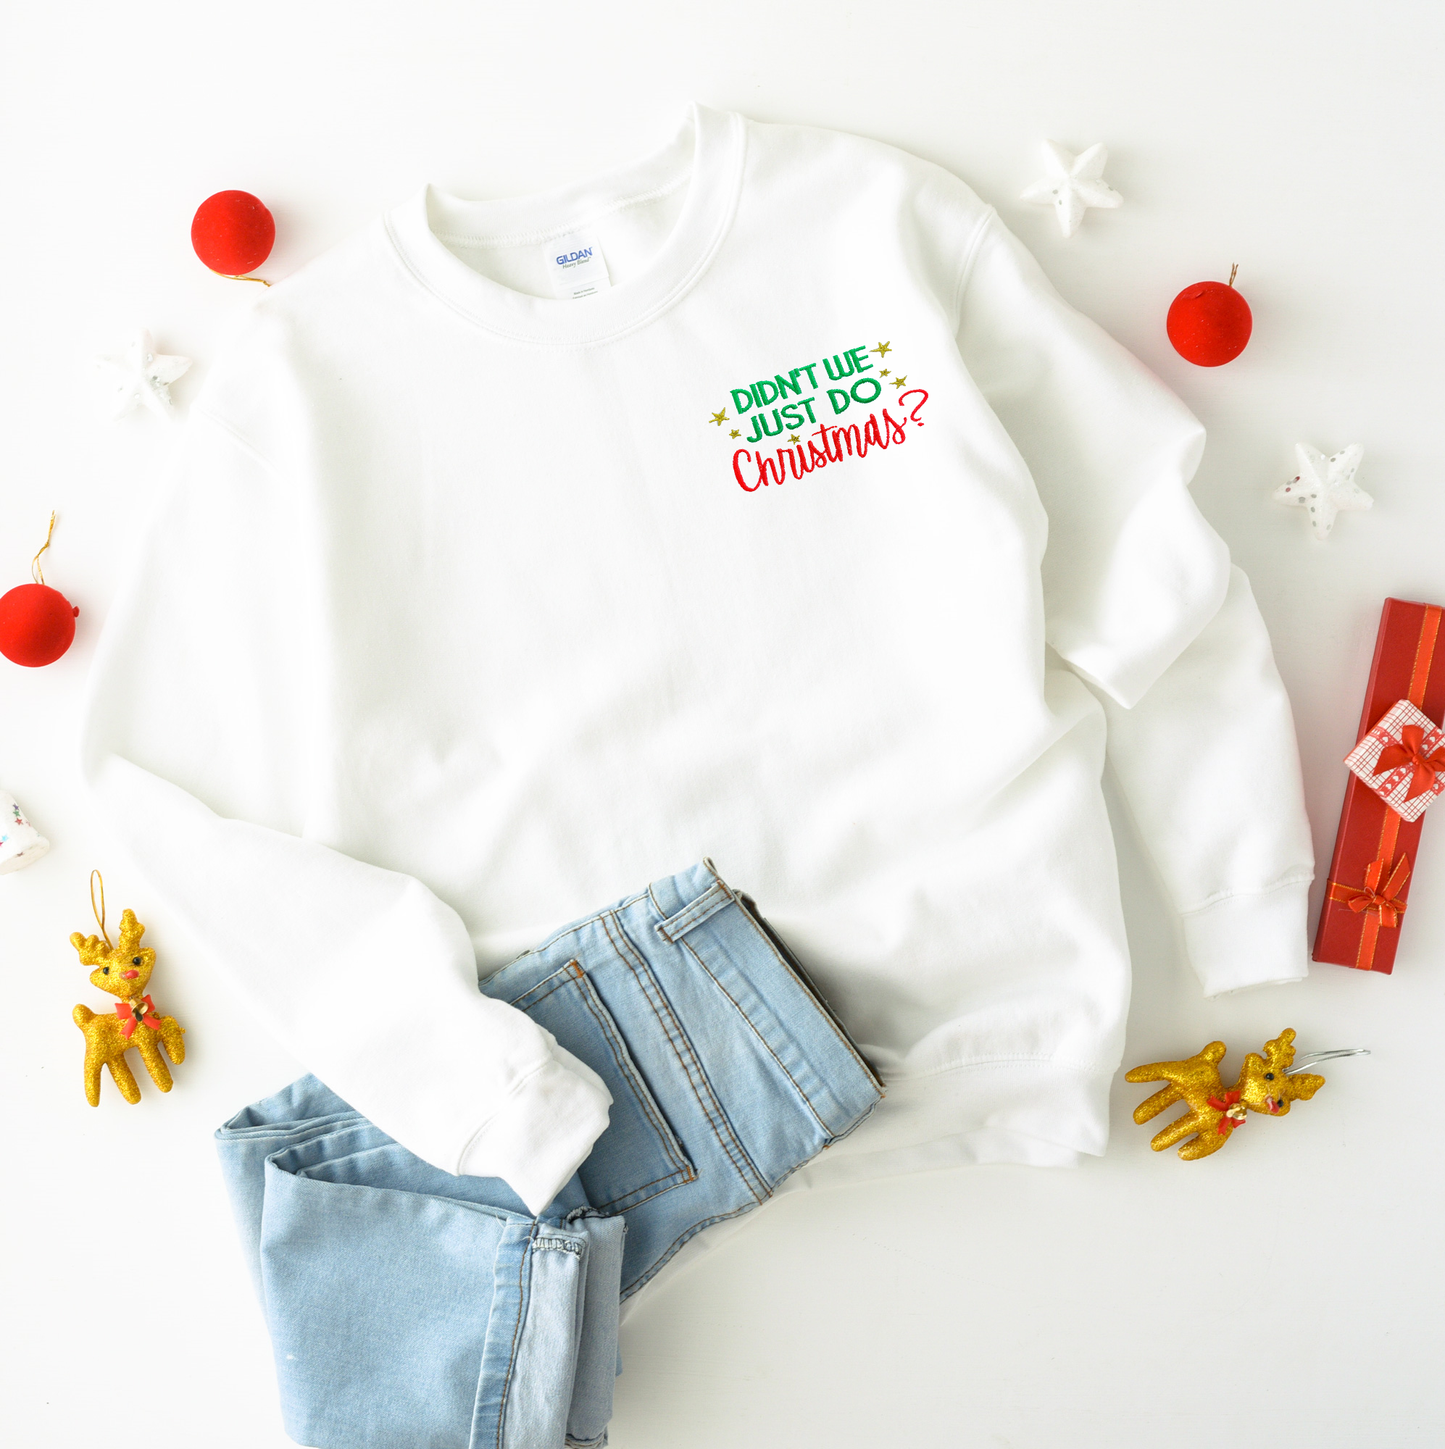 Didn't We Just Do Christmas? Embroidered Adult Unisex Crewneck Sweatshirt